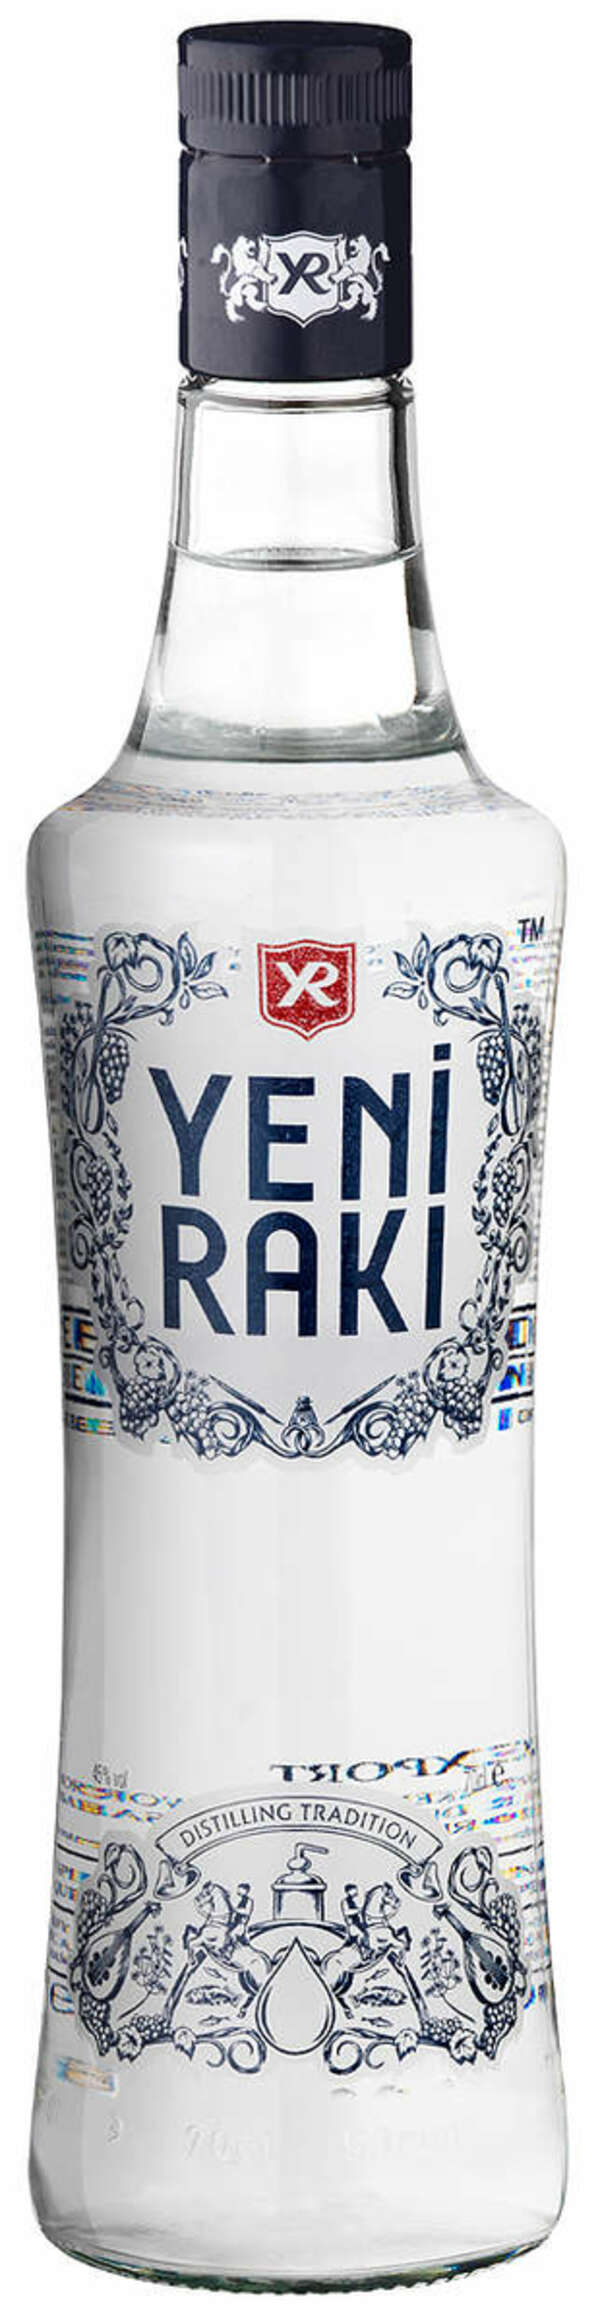 Bild 1 von YENI RAKI Türk. Anisspirituose